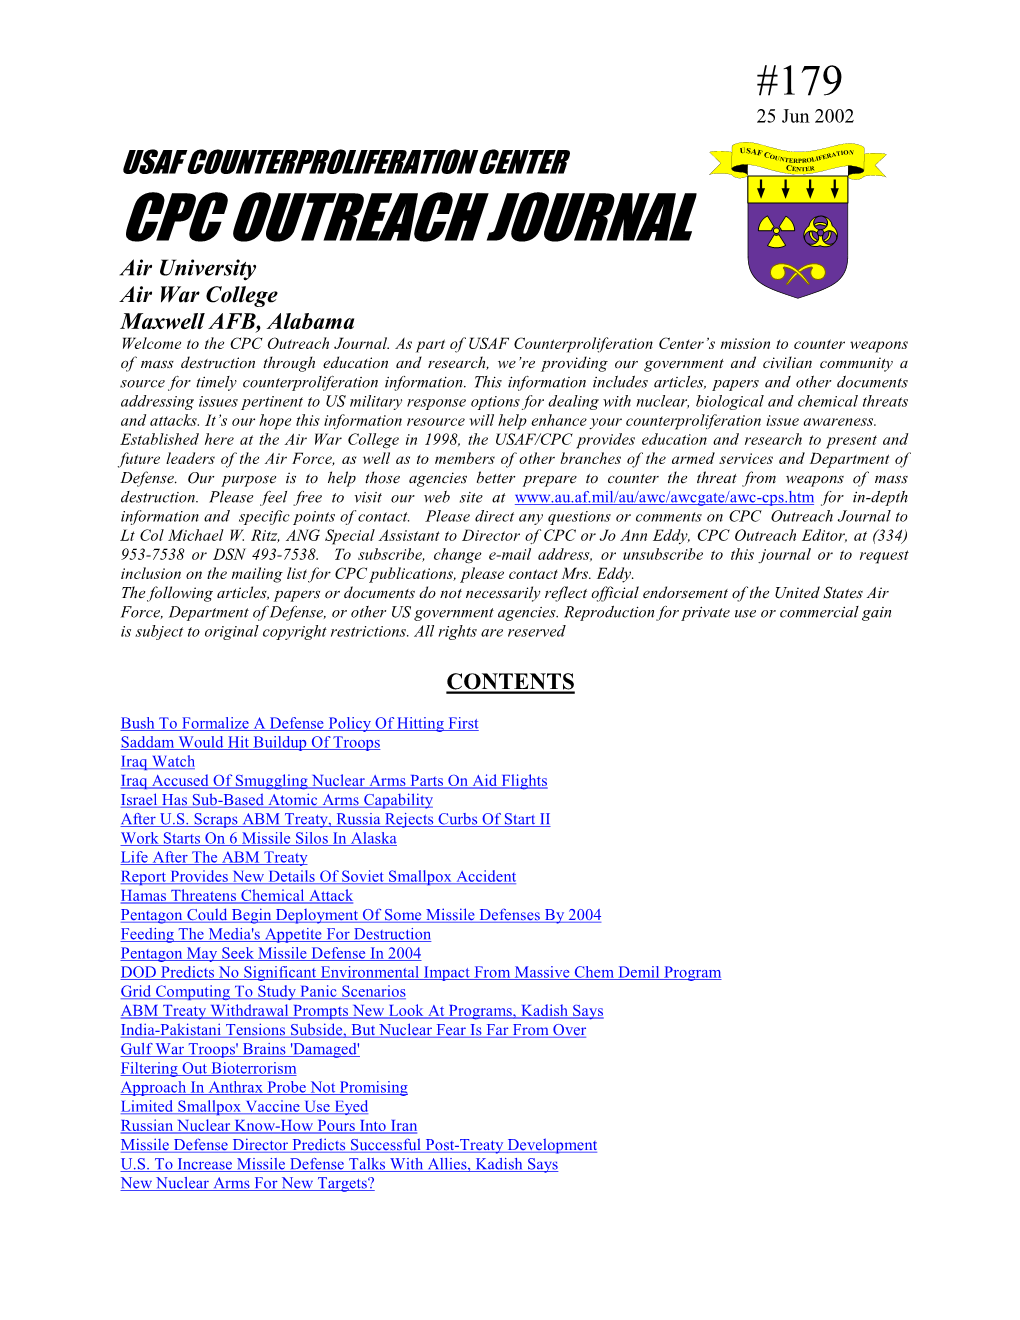 CPC Outreach Journal #179